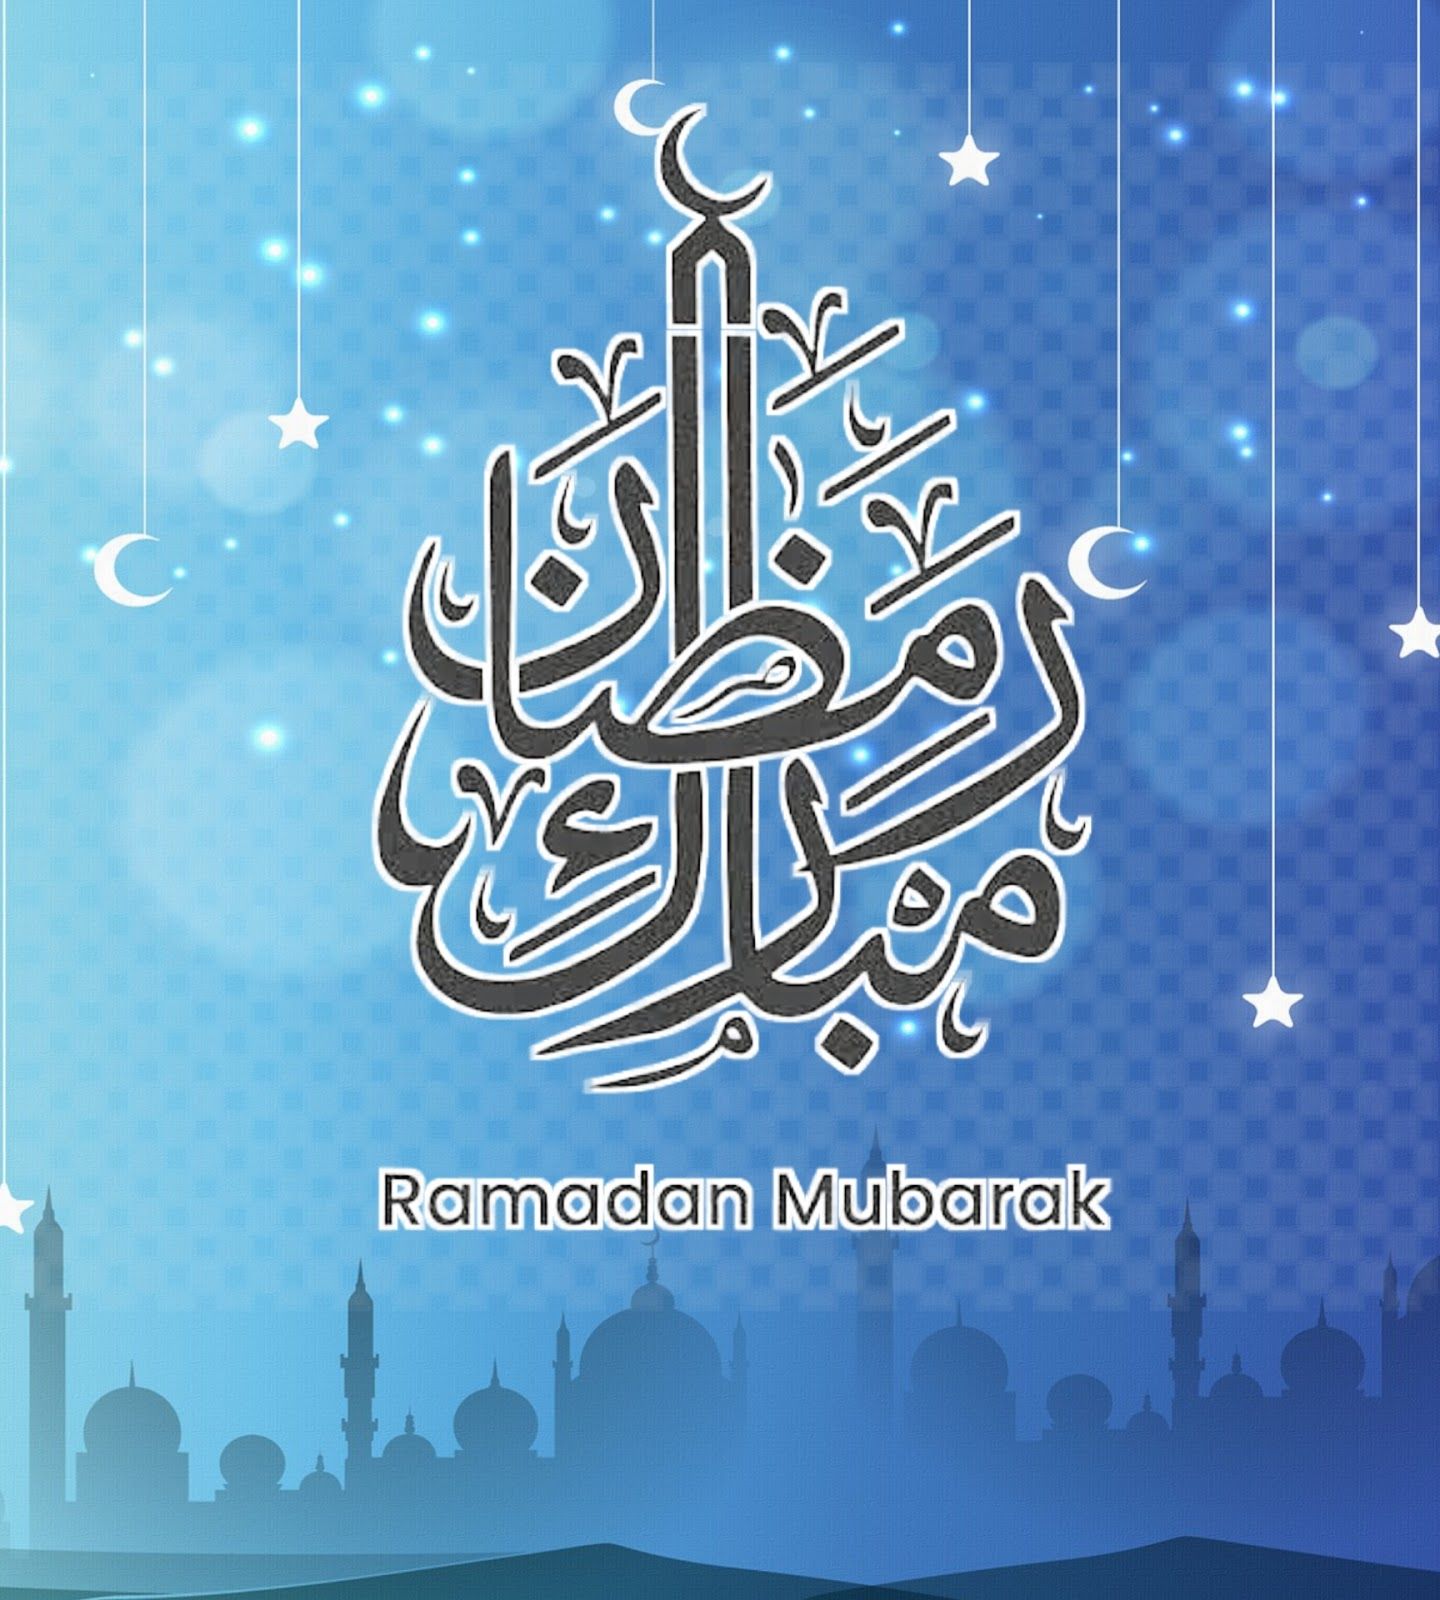 Ramadan 2021 Wallpaper Free Ramadan Kareem Cards 2021 Ramadan Mubarak Background Belarabyapps Kumpulan Wallpaper Ramadhan 2021 Cocok Untuk Gambar Dan Poster Ramadhan 1442 H Buat Anak Berikut Ini Kumpulan Wallpaper Ramadhan 2021 Kere Ihsan Moba